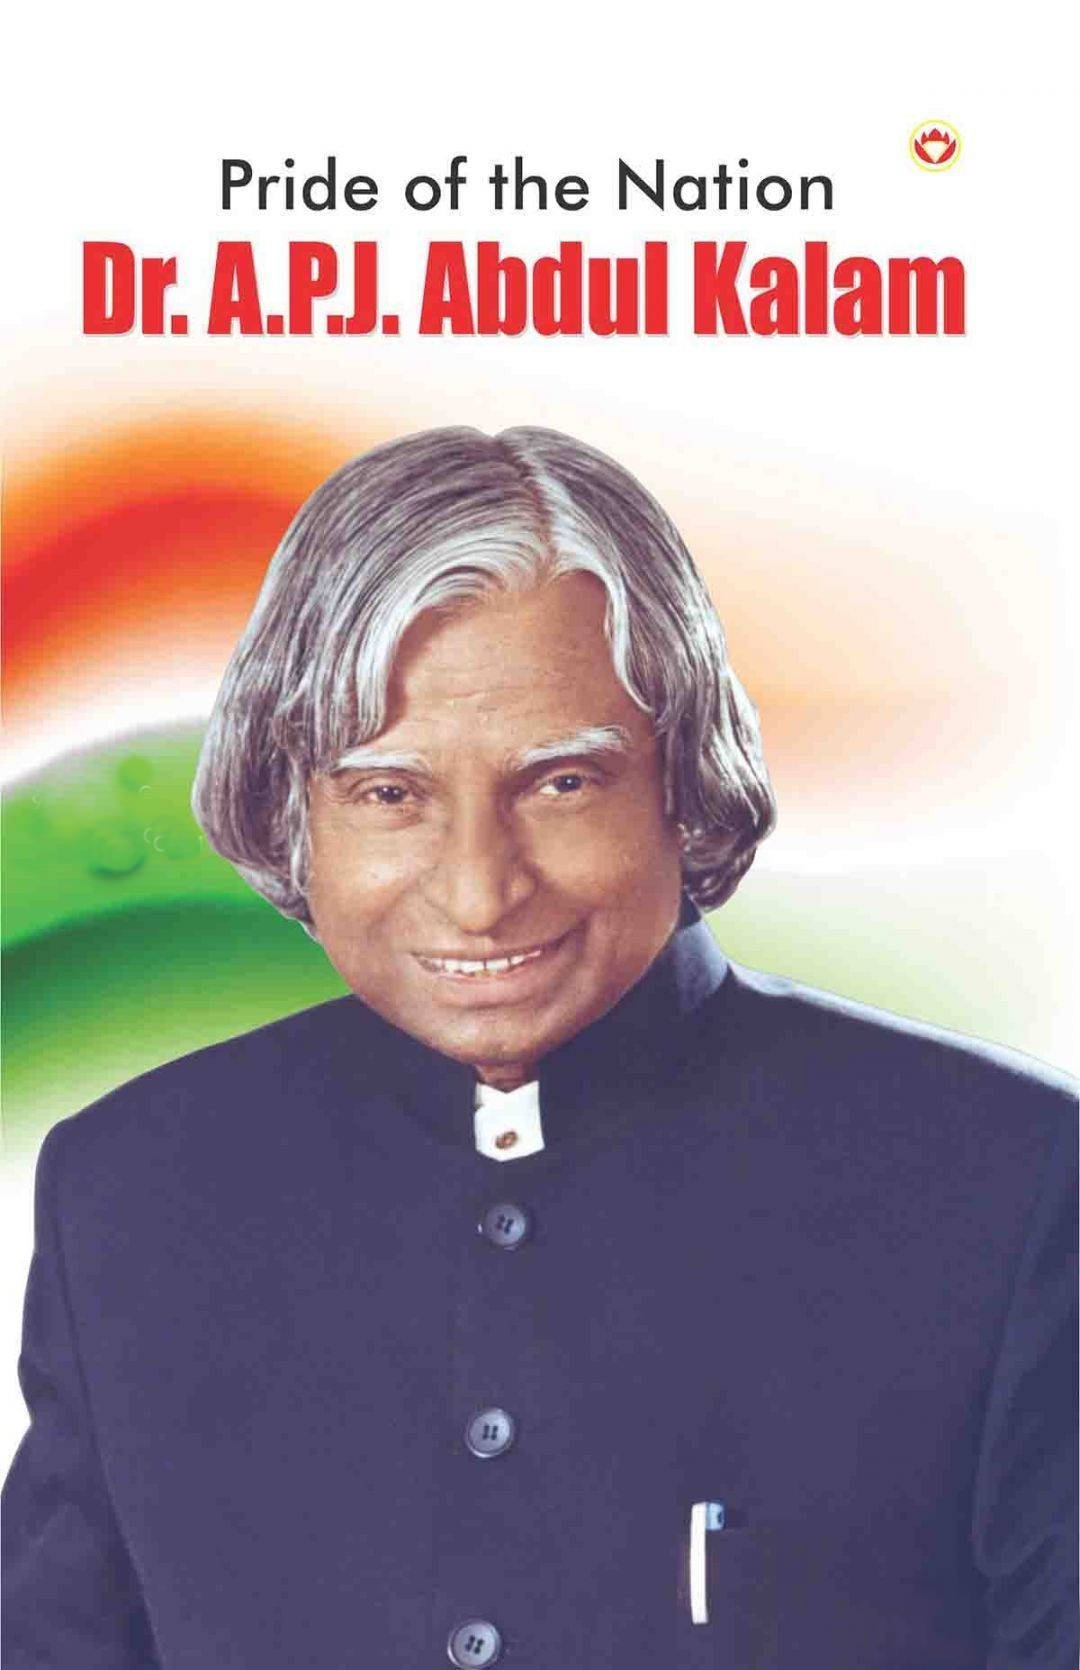 Download Abdul Kalam Hd Pride Of The Nation Wallpaper 